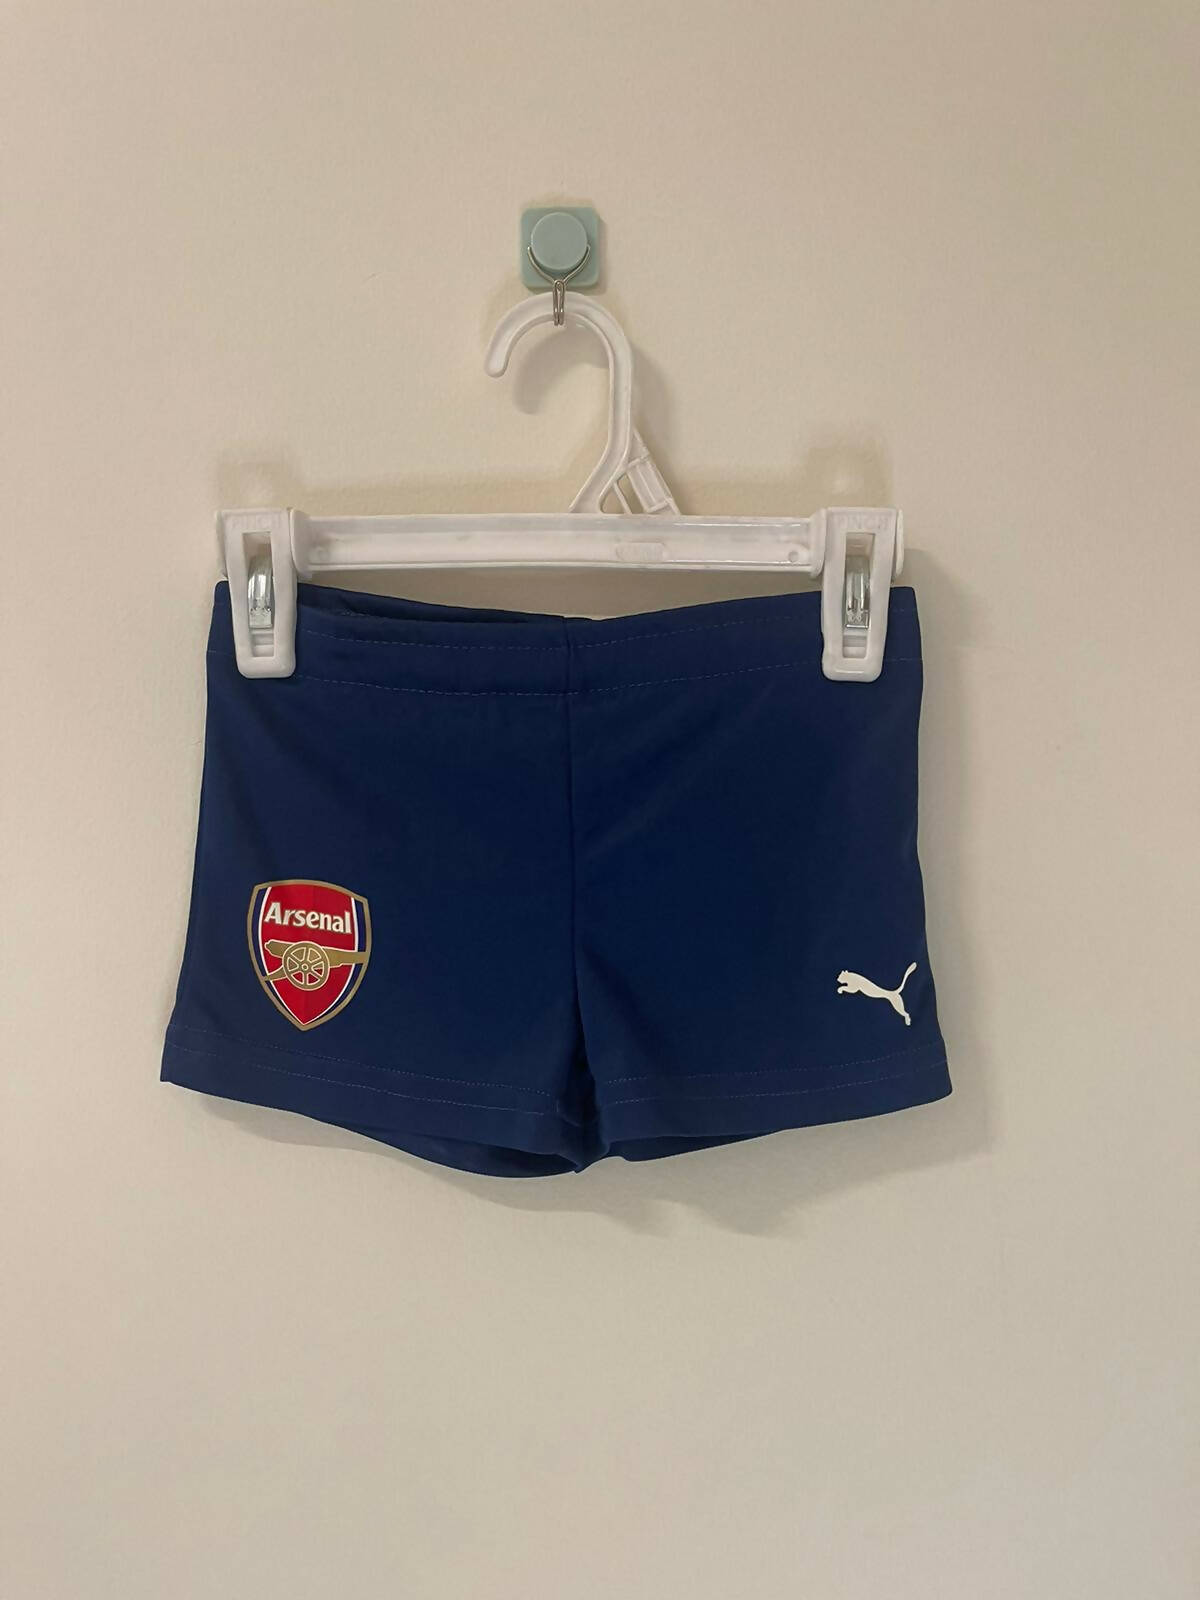 Aresenal Blue Shirt Shorts Football Kit UK 6/9 | Boys Tops & Shirts | Preloved